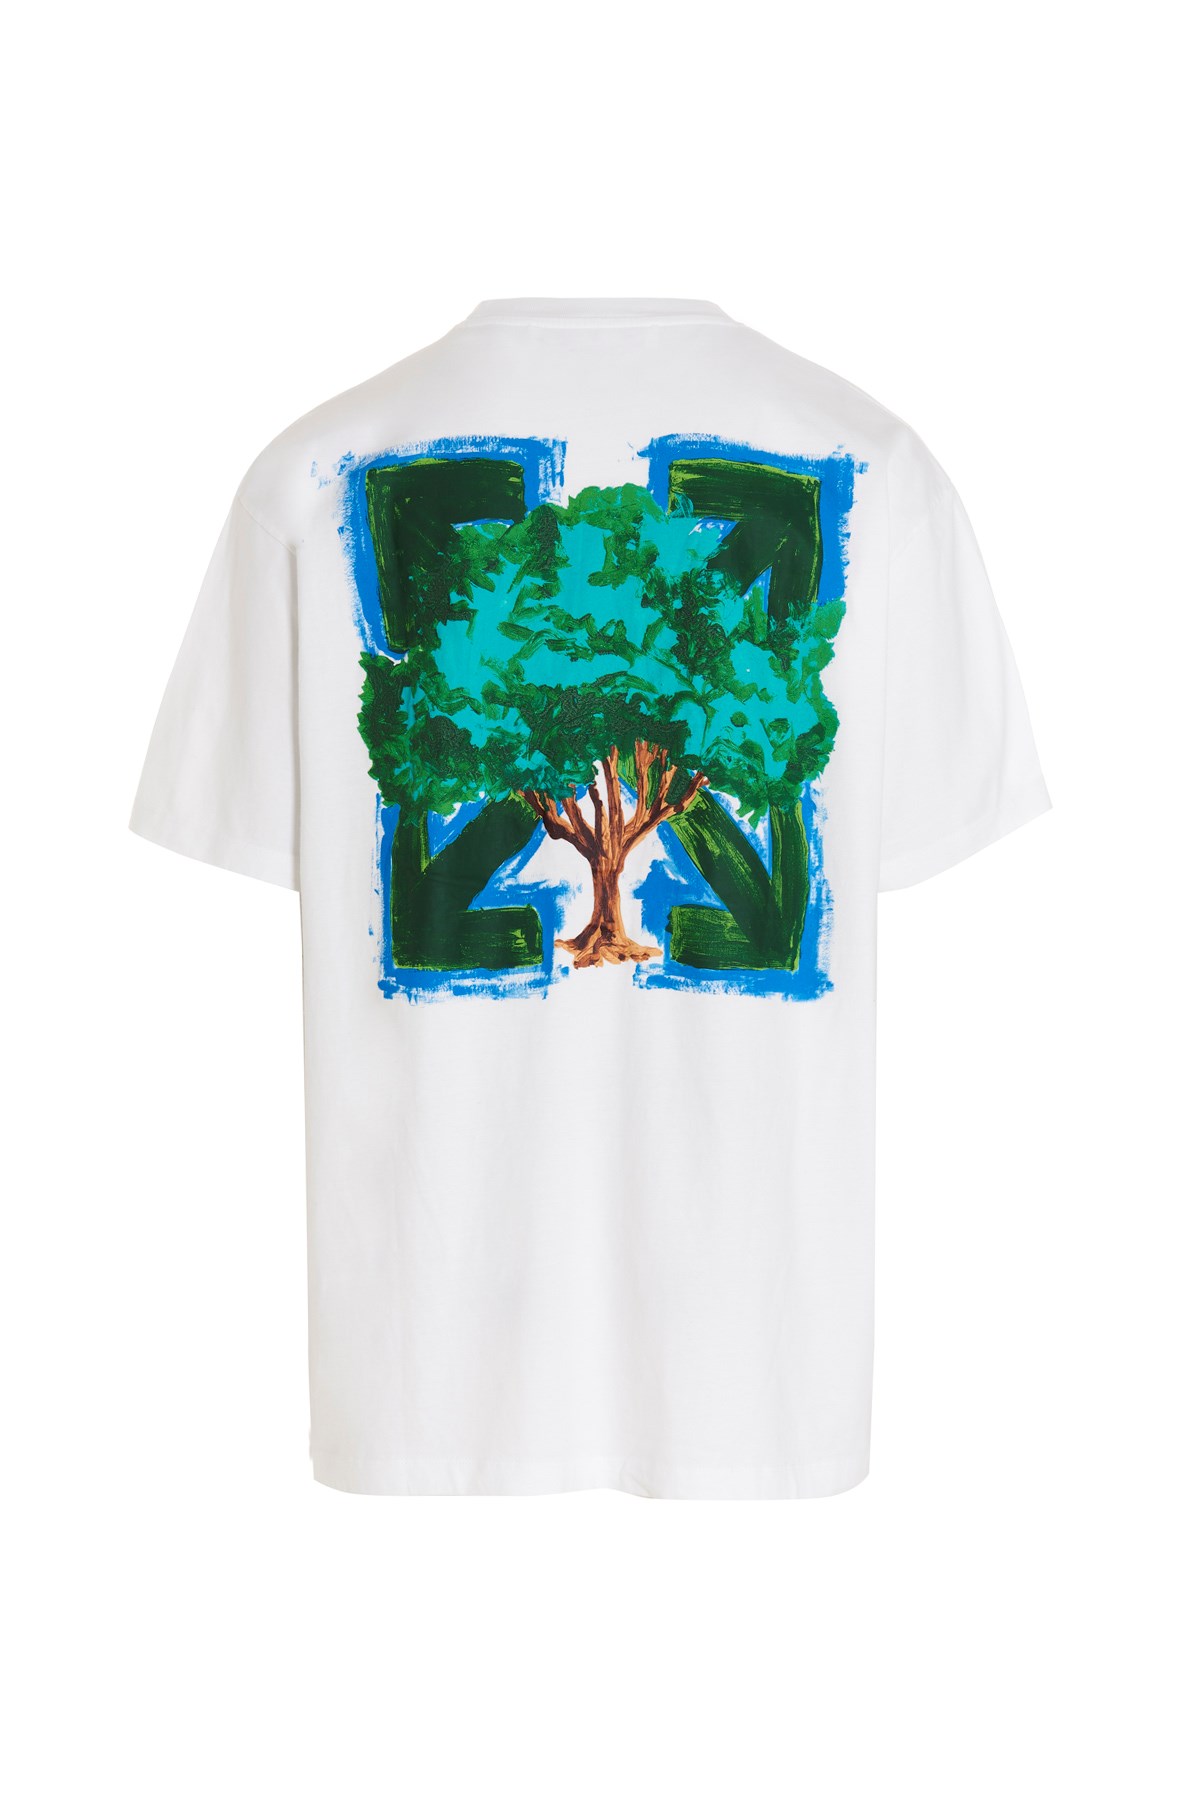 OFF-WHITE ‘Arrow Tree' T-Shirt